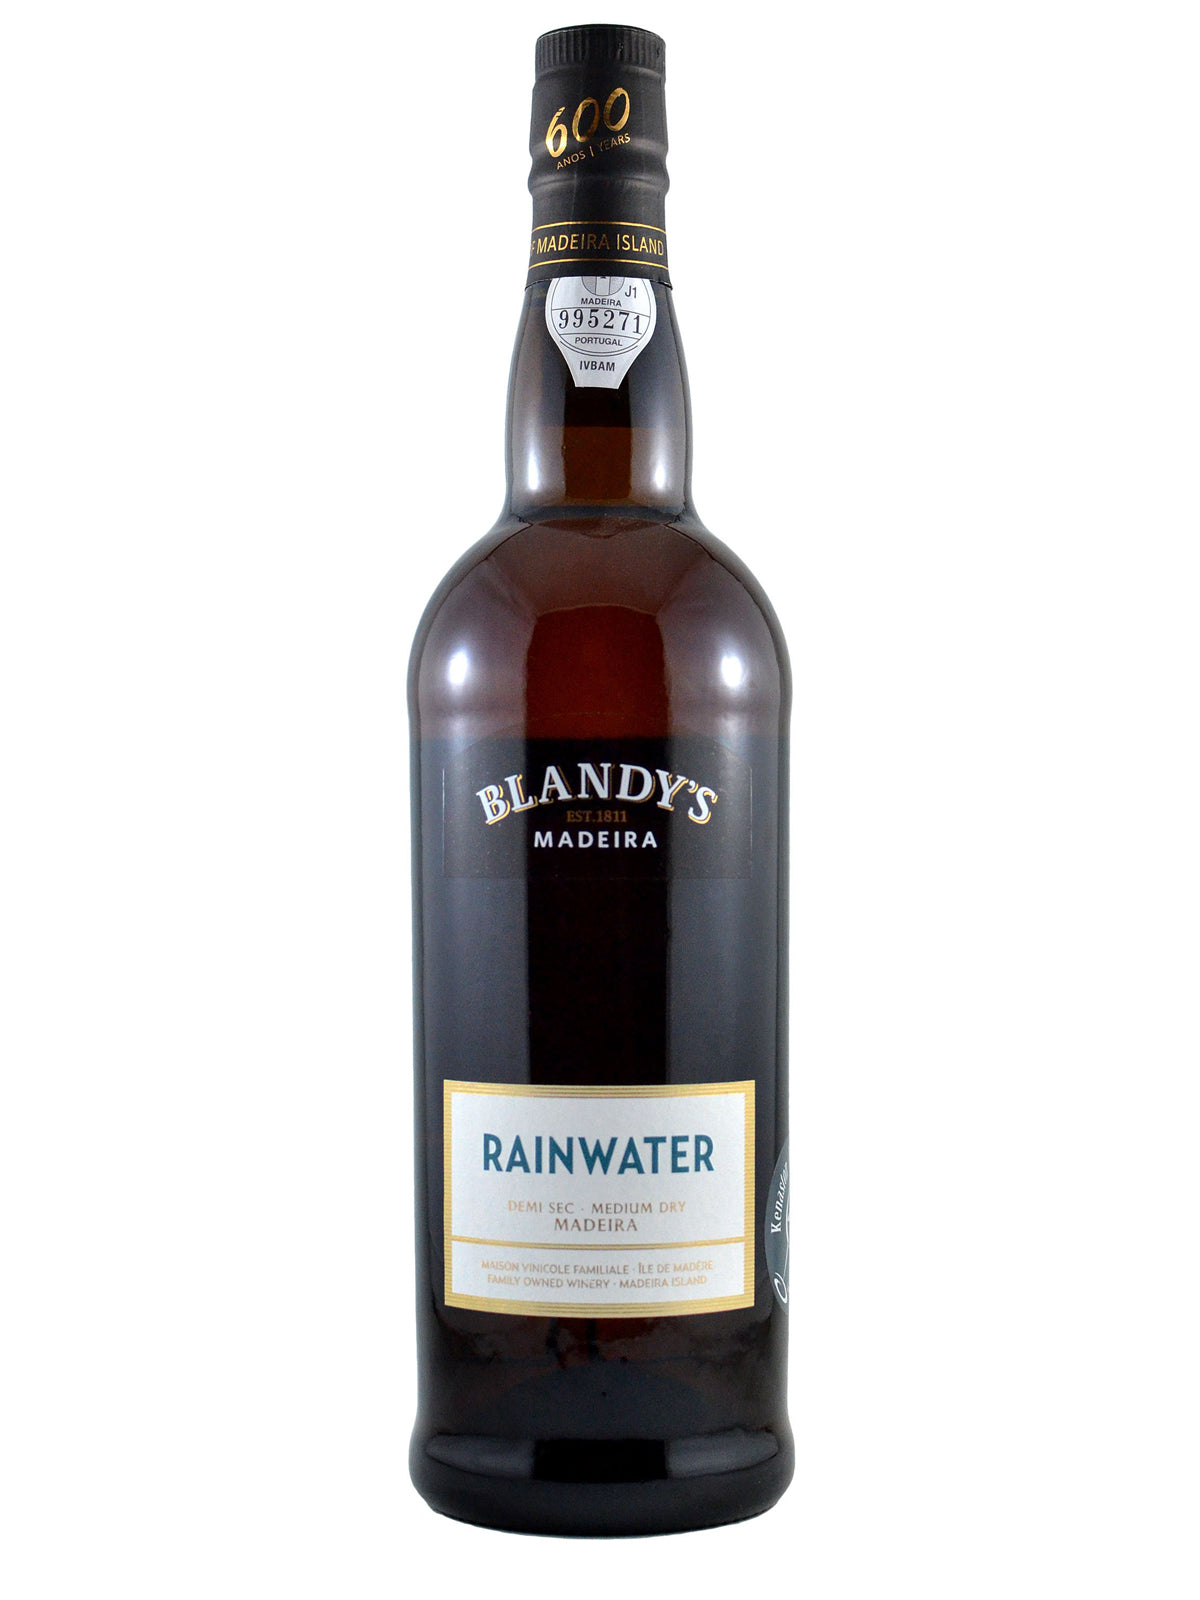 Blandy's " Rainwater " Demi Sec Madeira